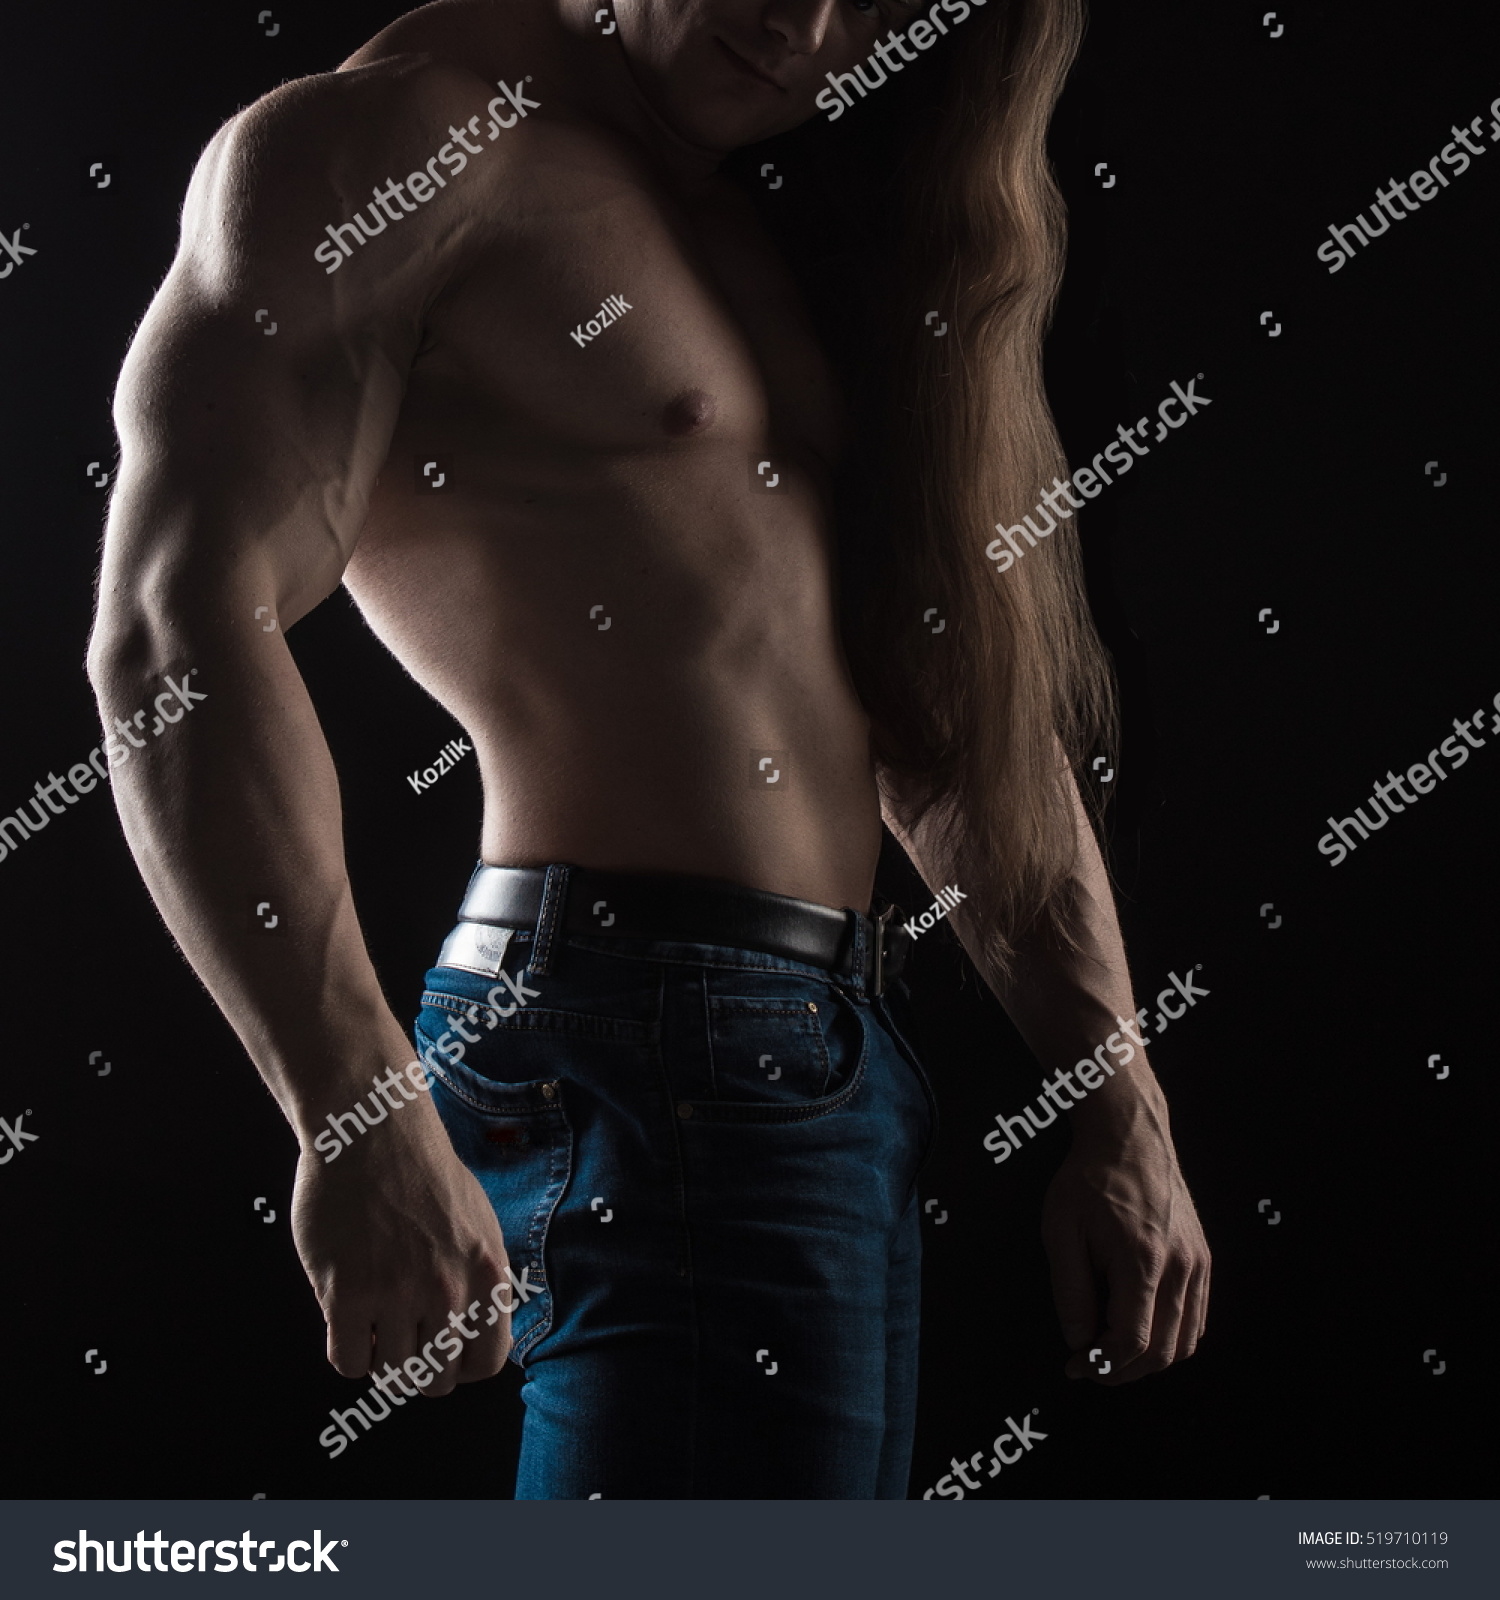 Naked Torso Male Bodybuilder Athlete Studio库存照片519710119 Shutterstock